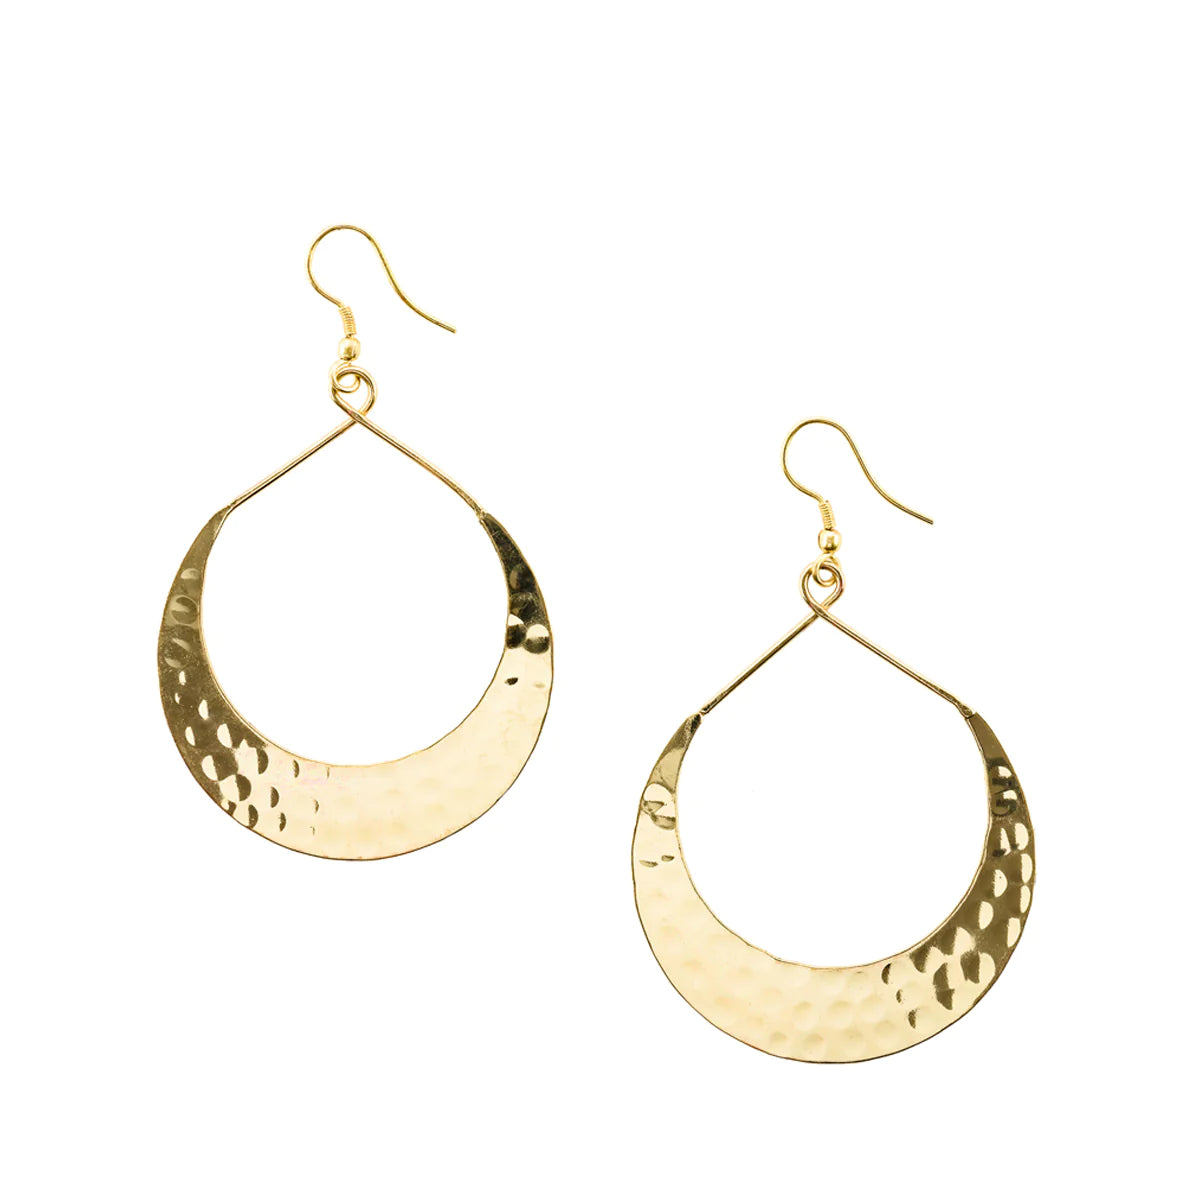 Gold crescent earrings on white flatlay